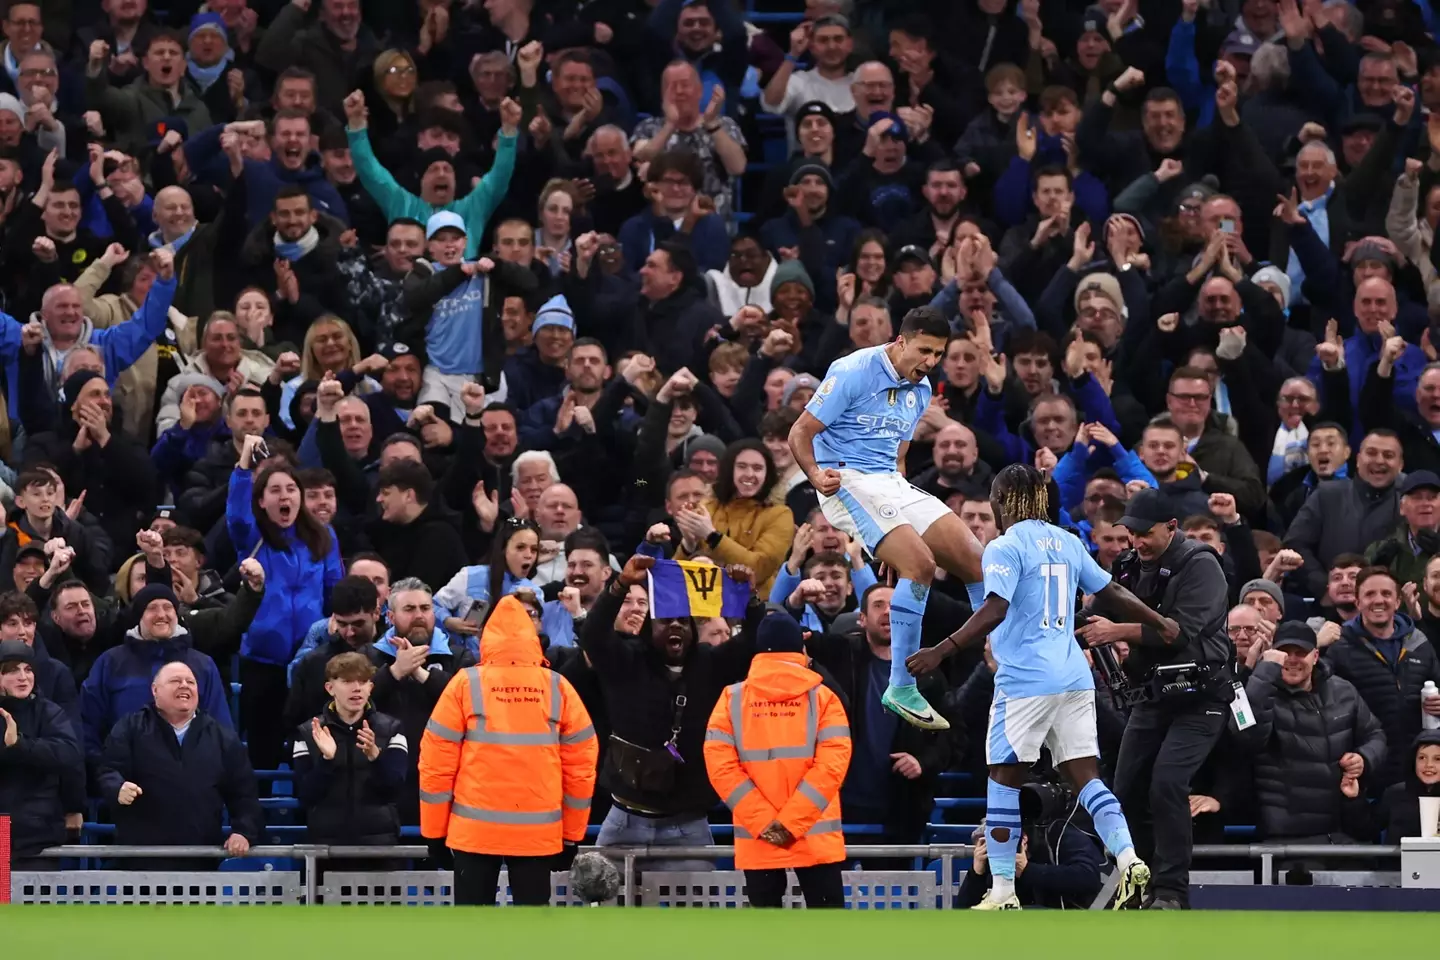 Manchester City fans celebrate Rodri's goal against Aston Villa. Image: Getty